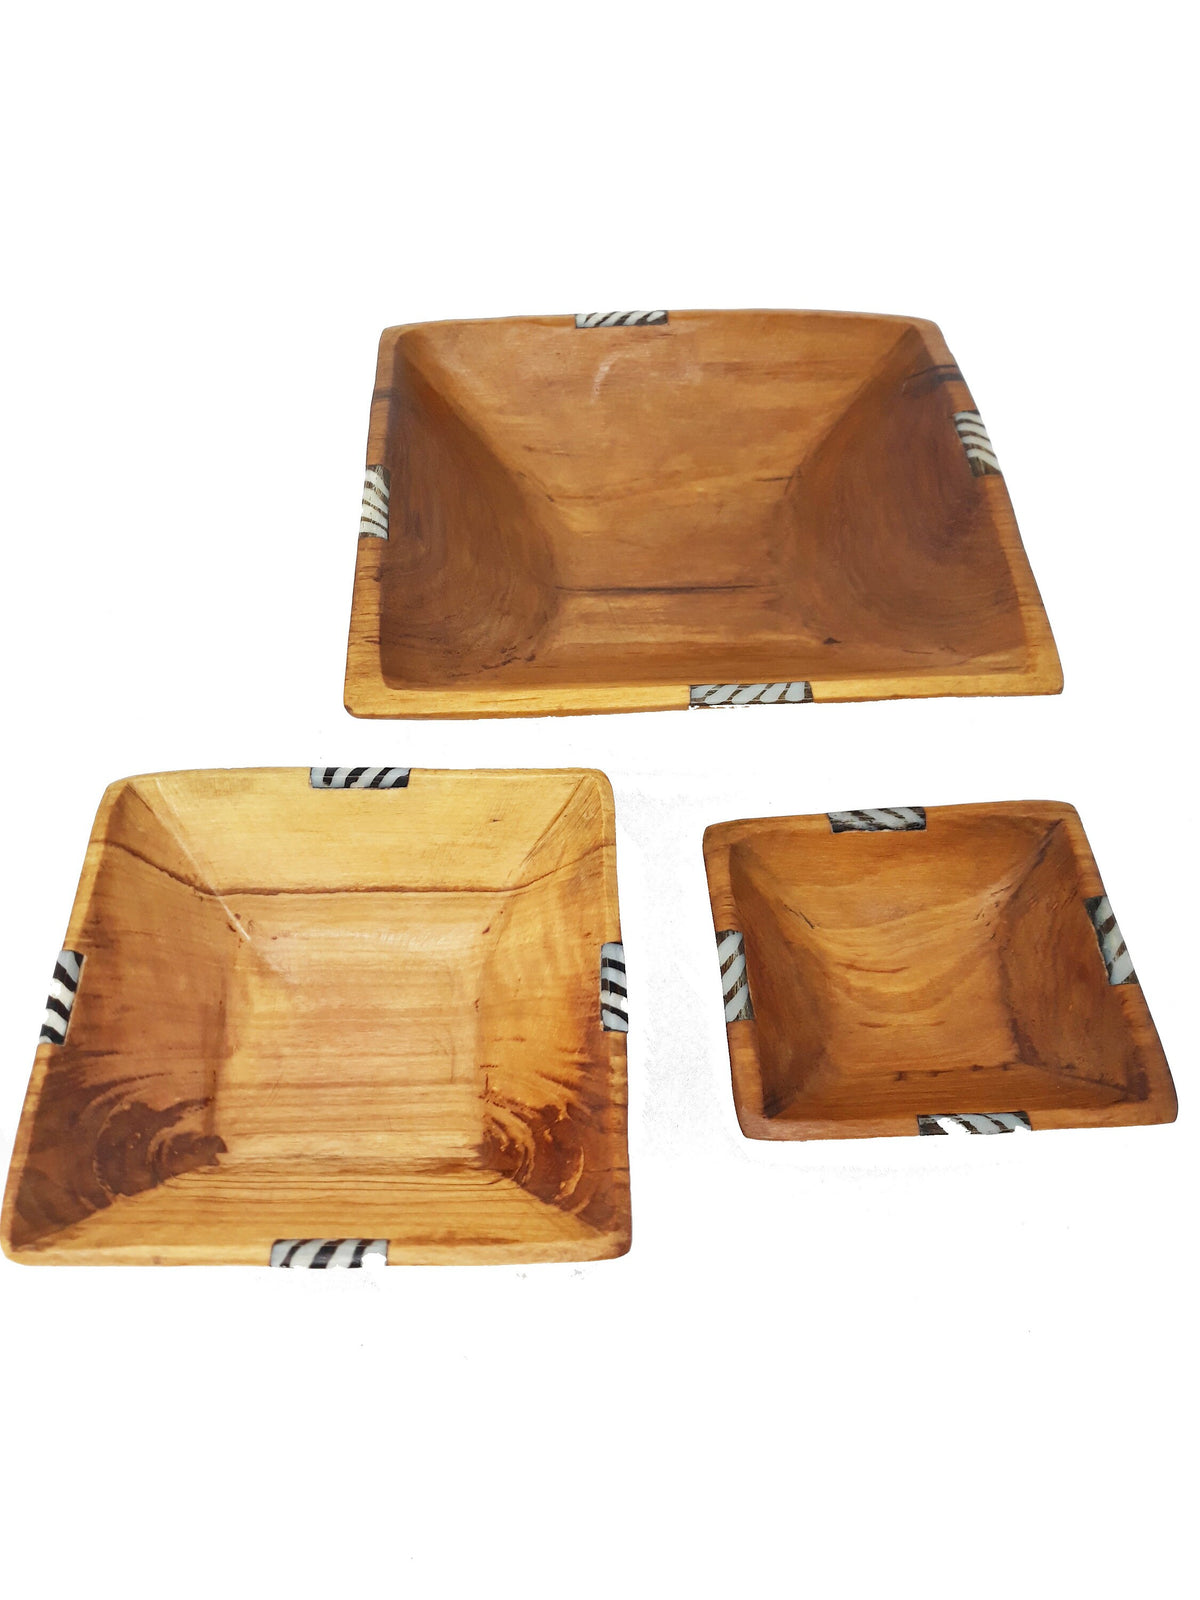 Wooden bowl sets,  set of 3 wooden bowls, Handmade wooden bowls, Christmas gift, Farmhouse wood bowl, wooden snack bowl, set of wood bowls,